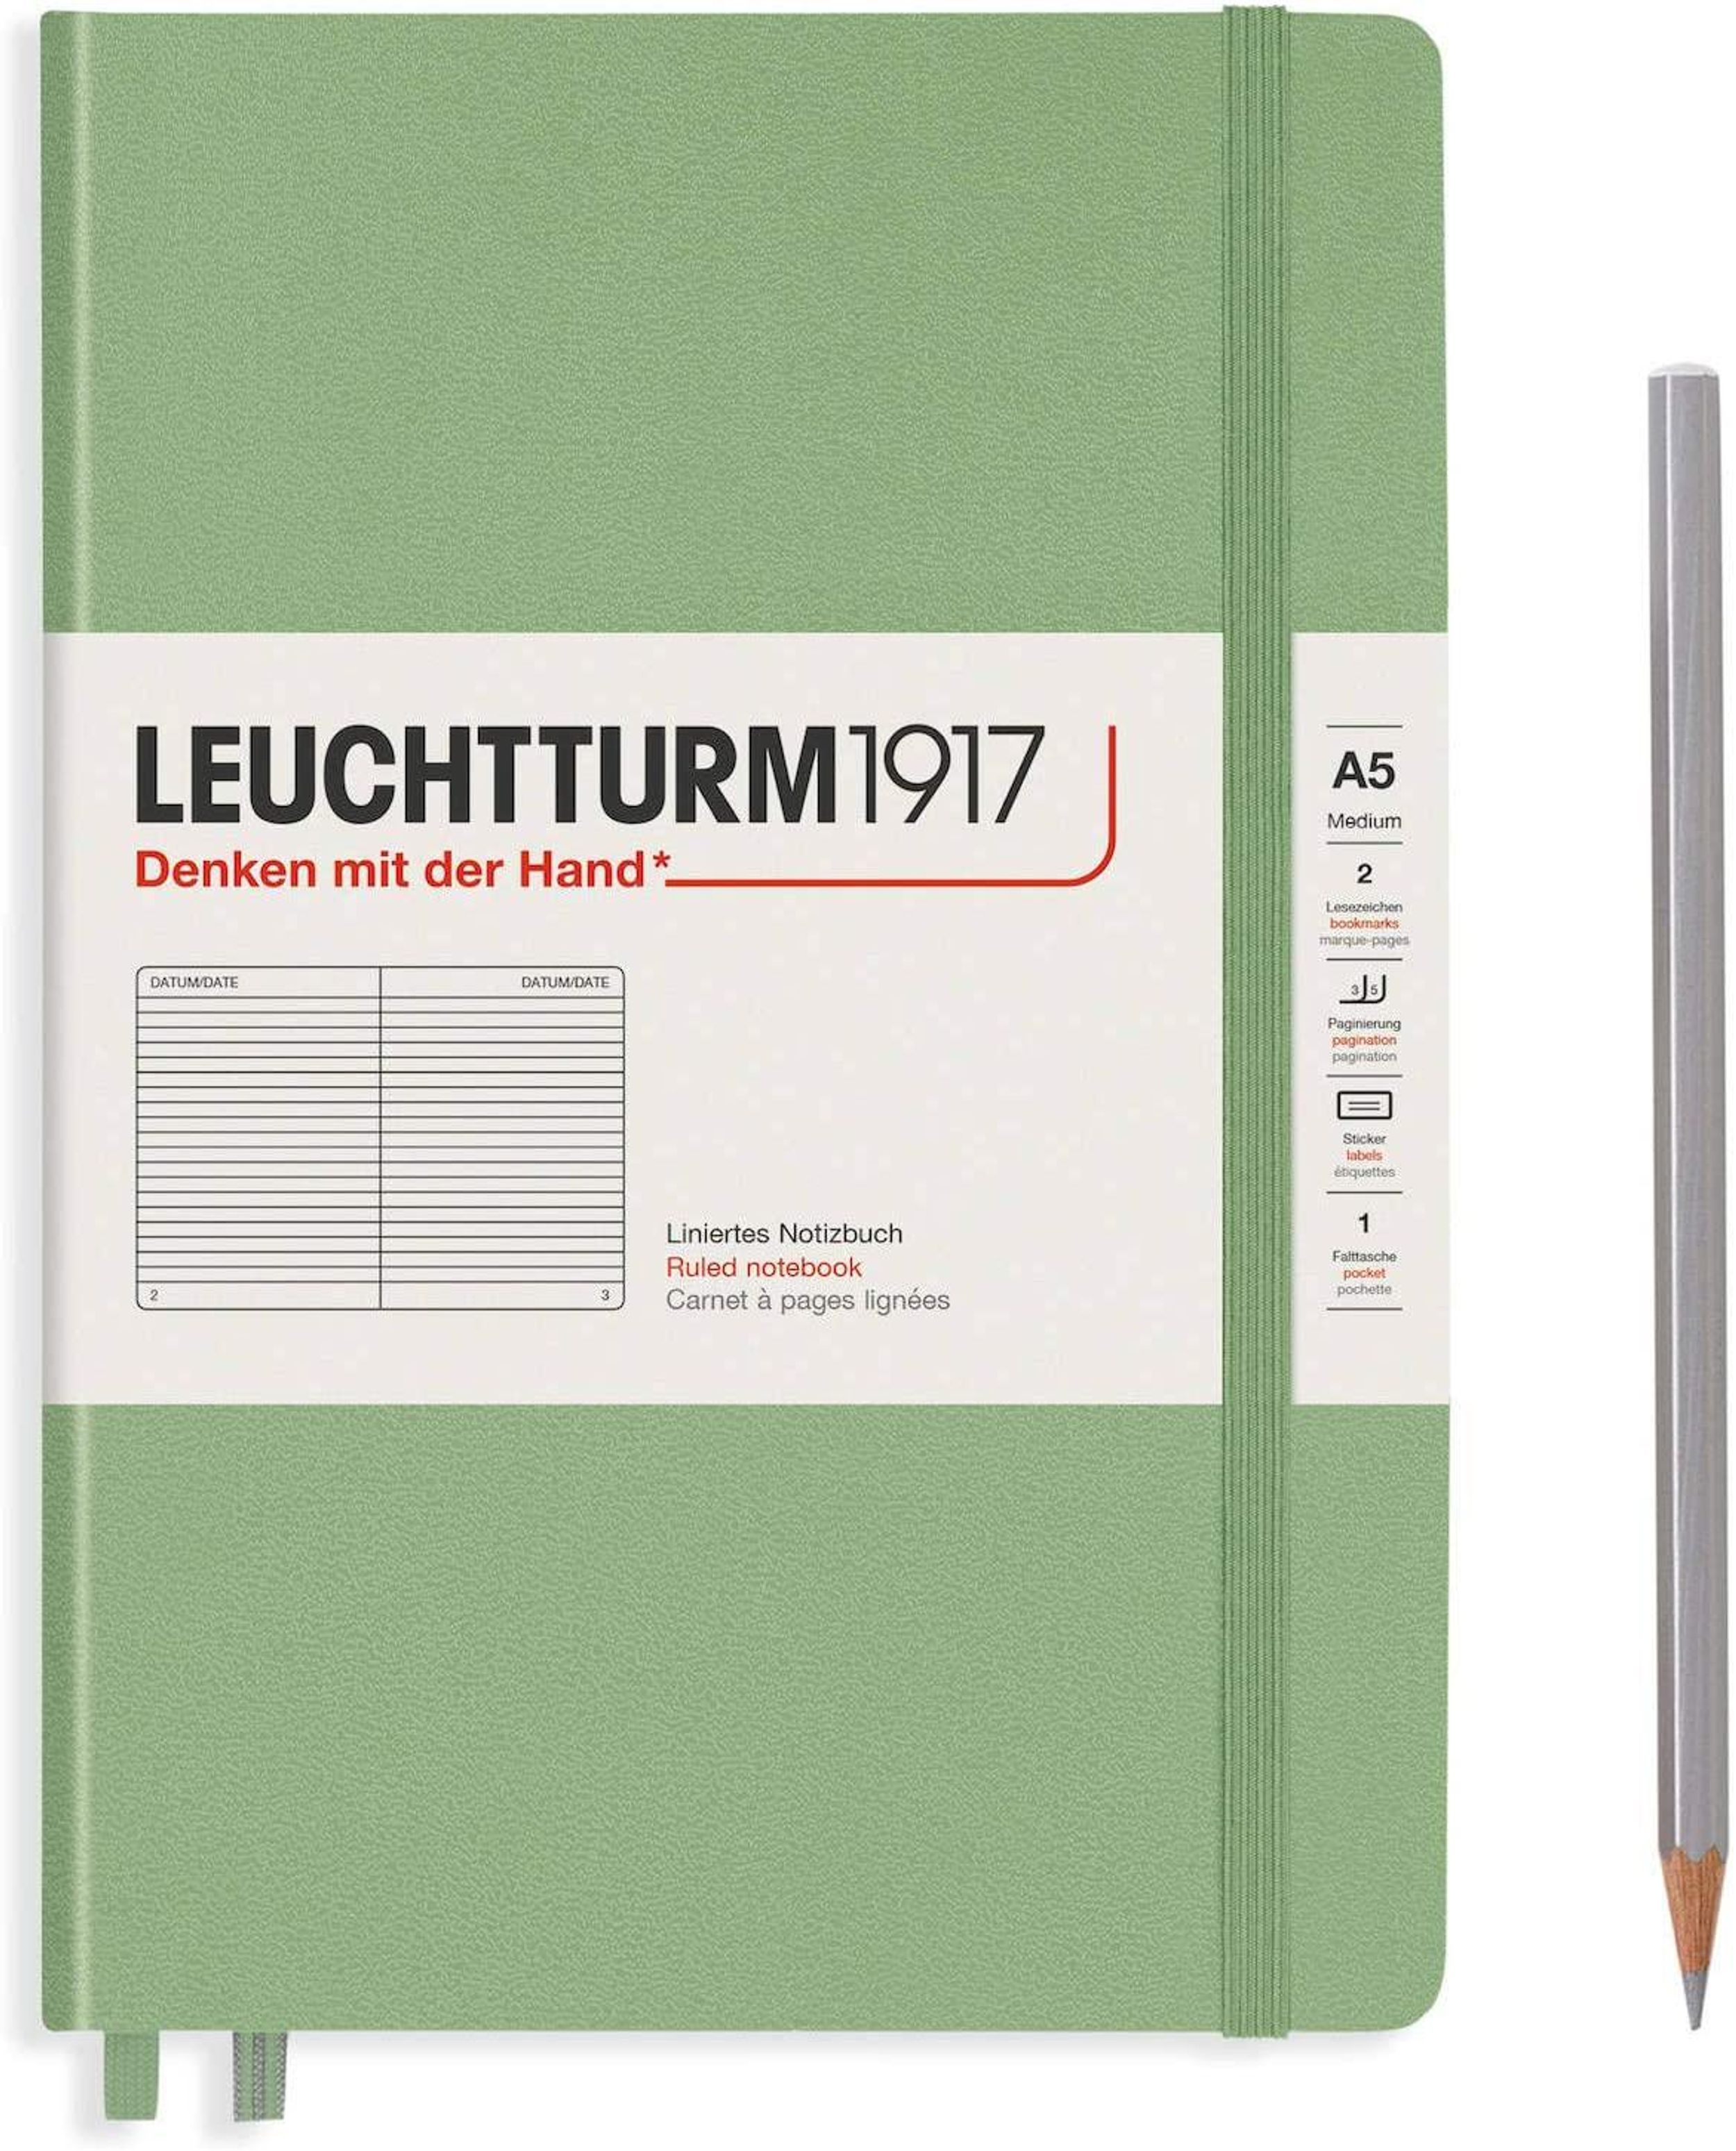 Medium A5 Ruled Hardcover Notebook